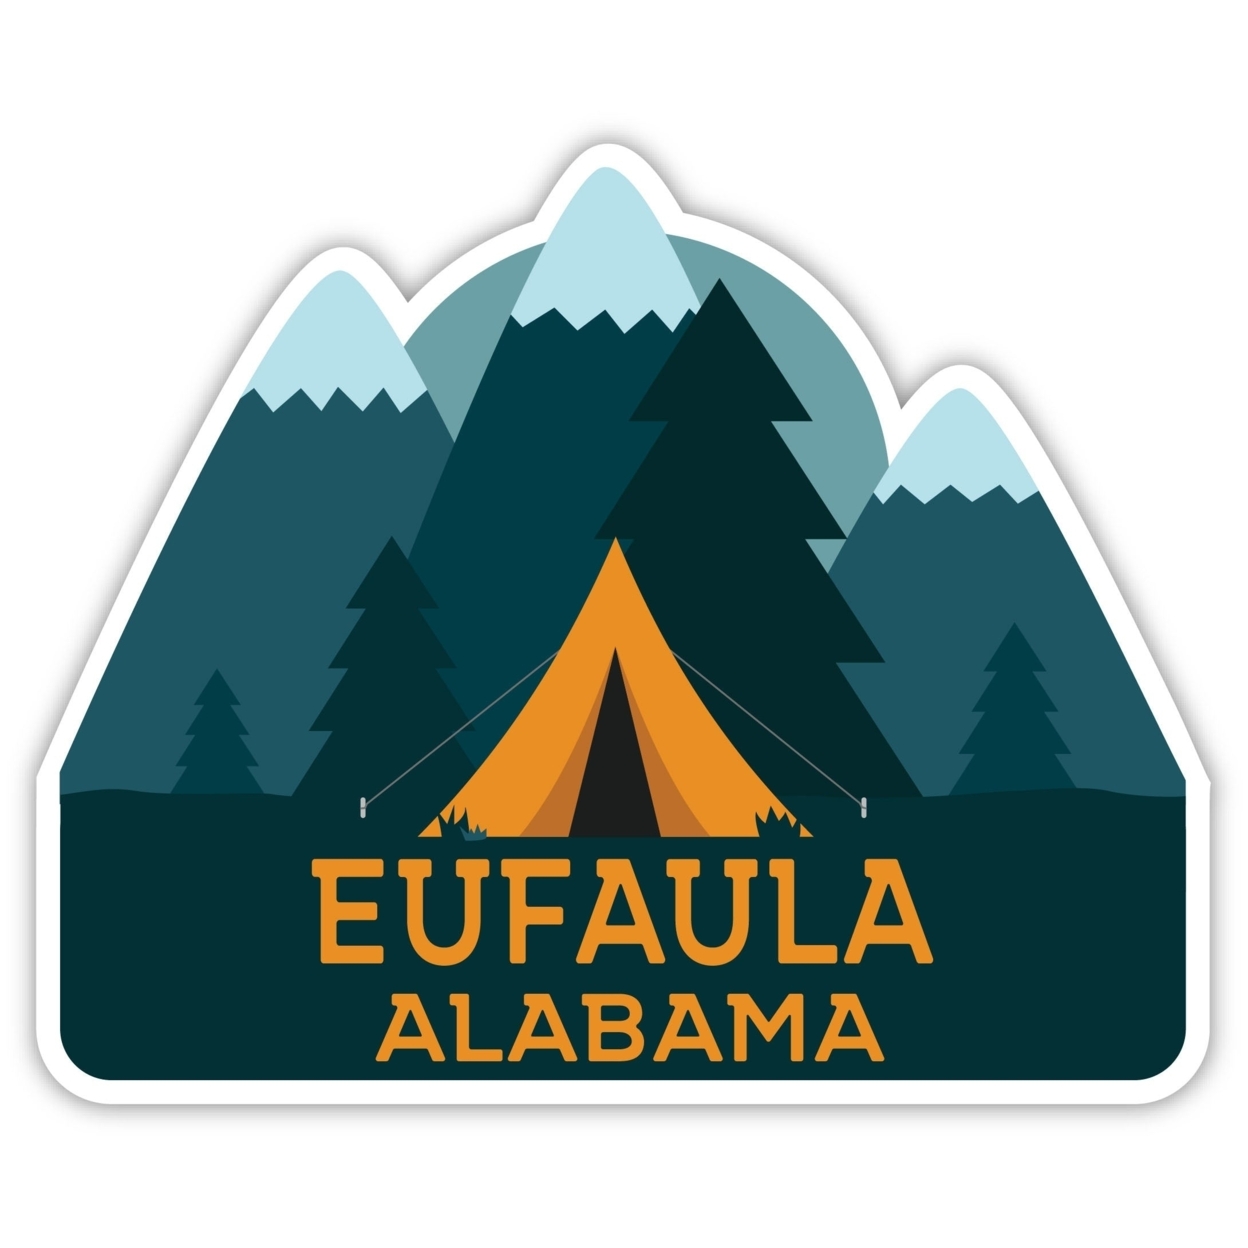 Eufaula Alabama Souvenir Decorative Stickers (Choose Theme And Size) - Single Unit, 12-Inch, Adventures Awaits